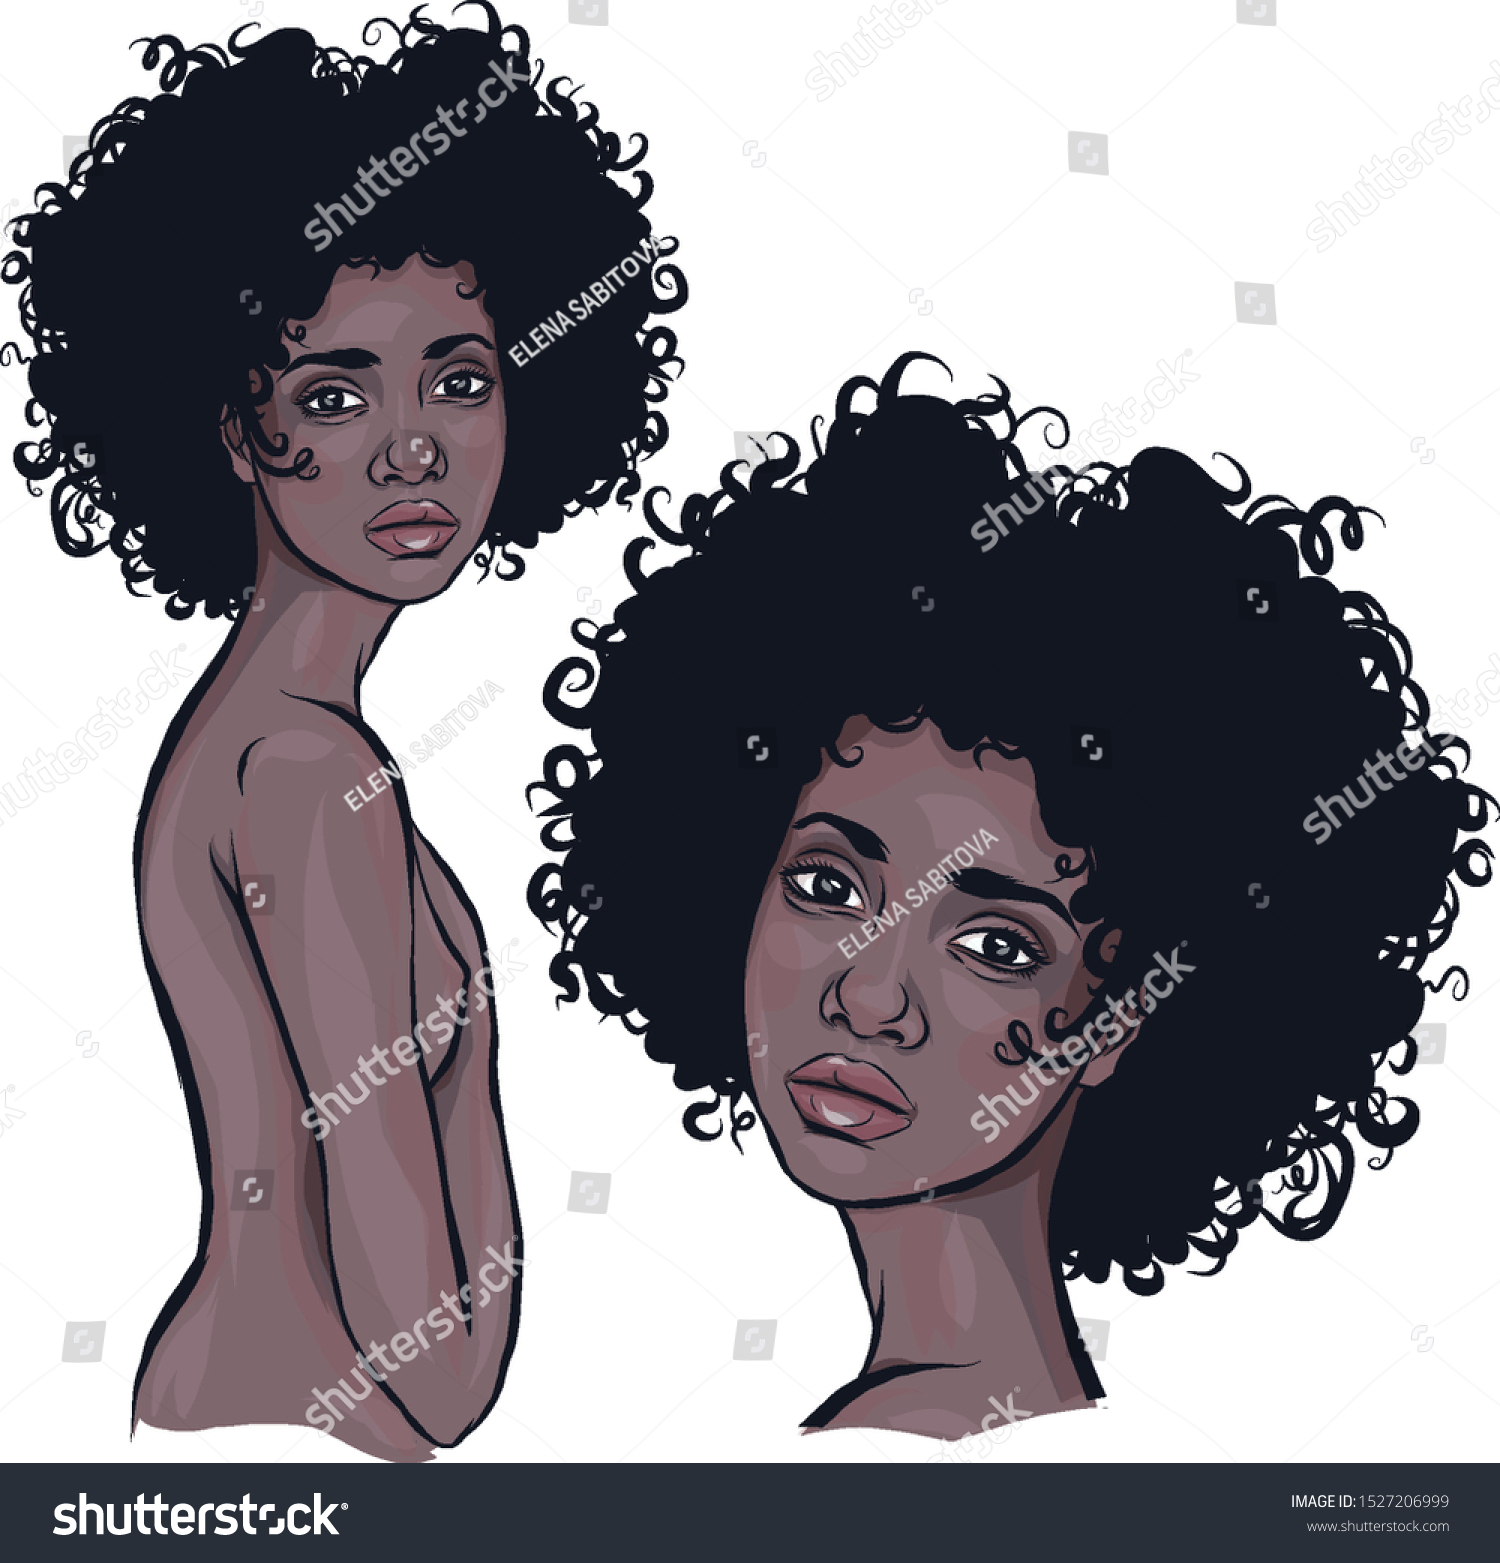 Black Beautiful Naked Women